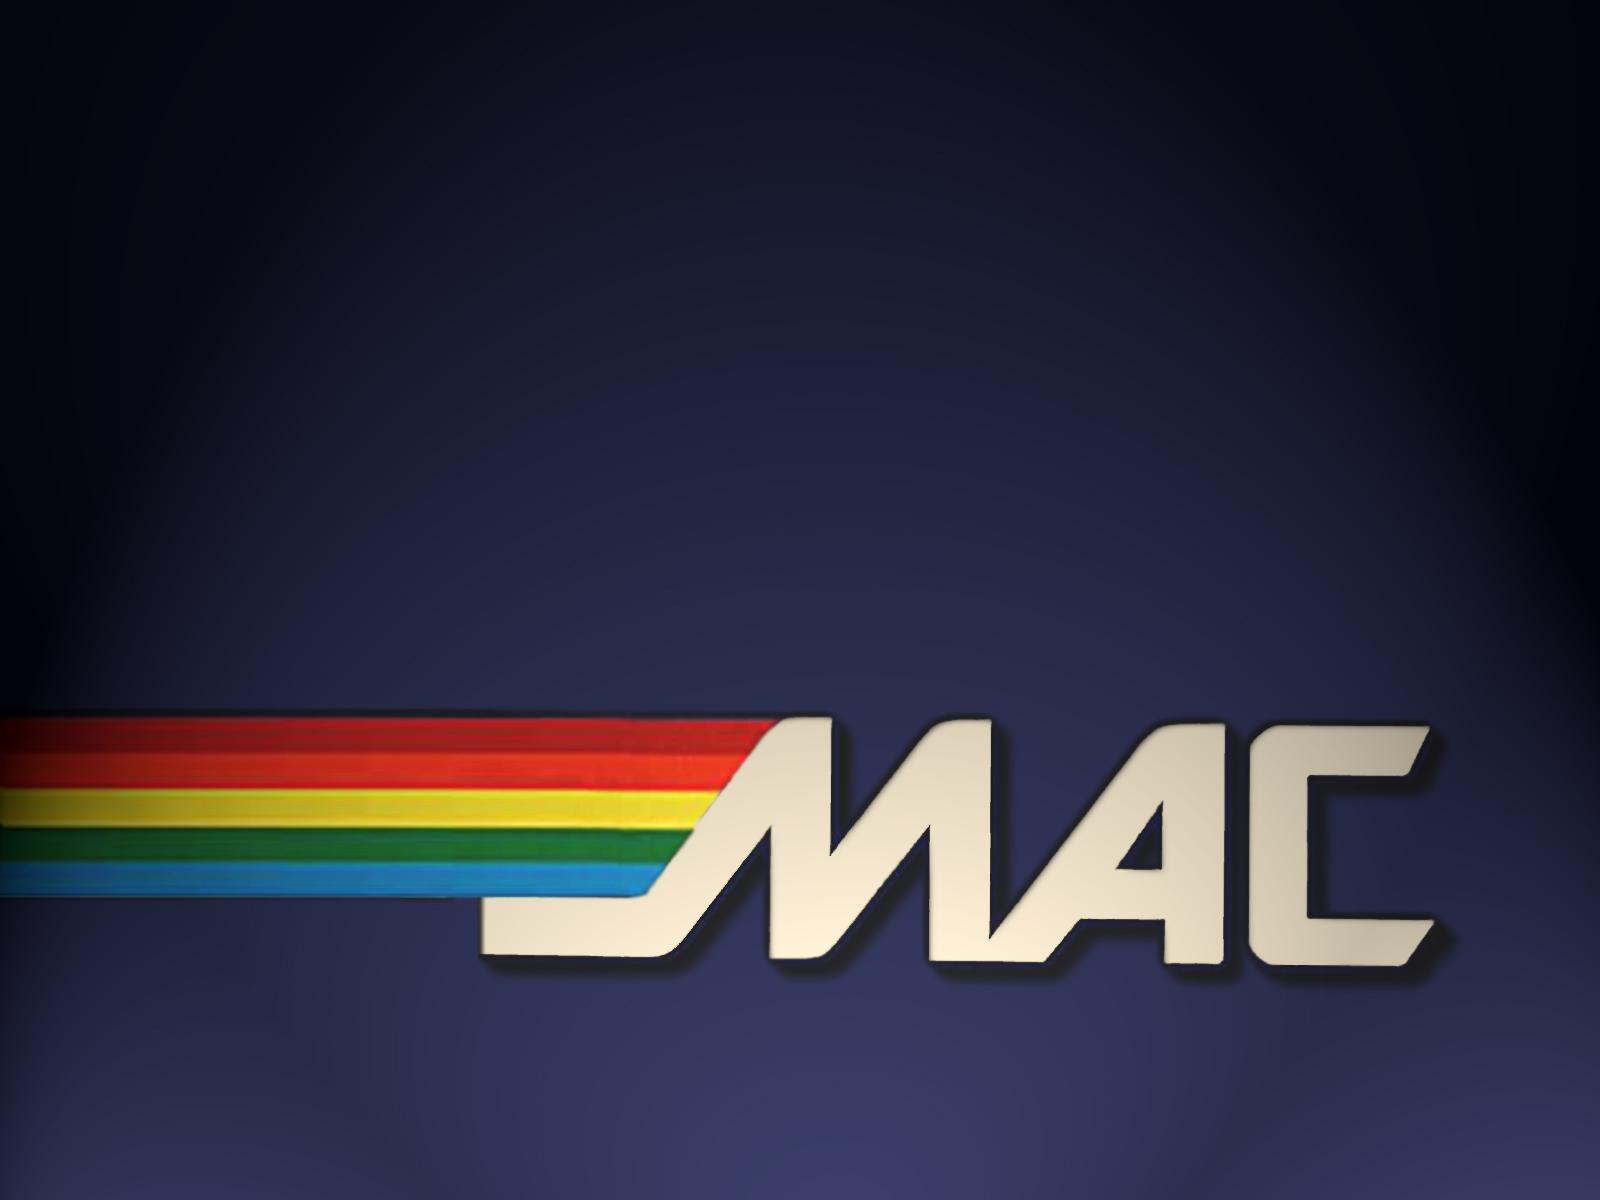 Apple Macintosh dark wallpaper free desktop background